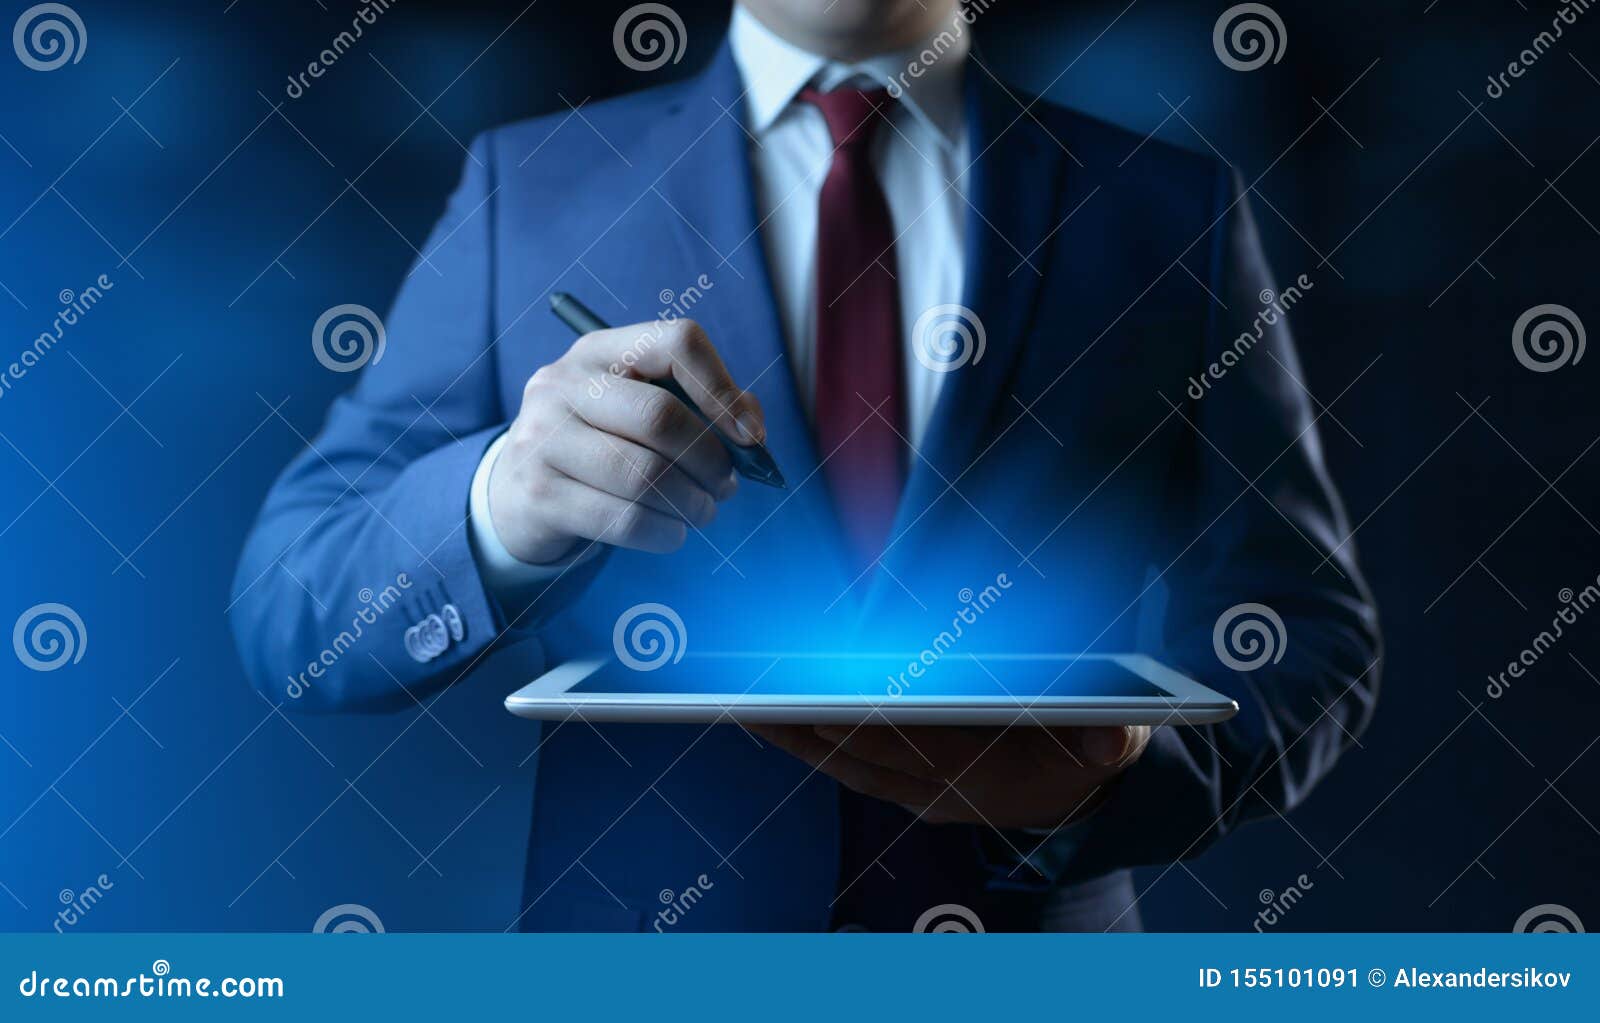 businessman holding digital tablet. man using gadget in office